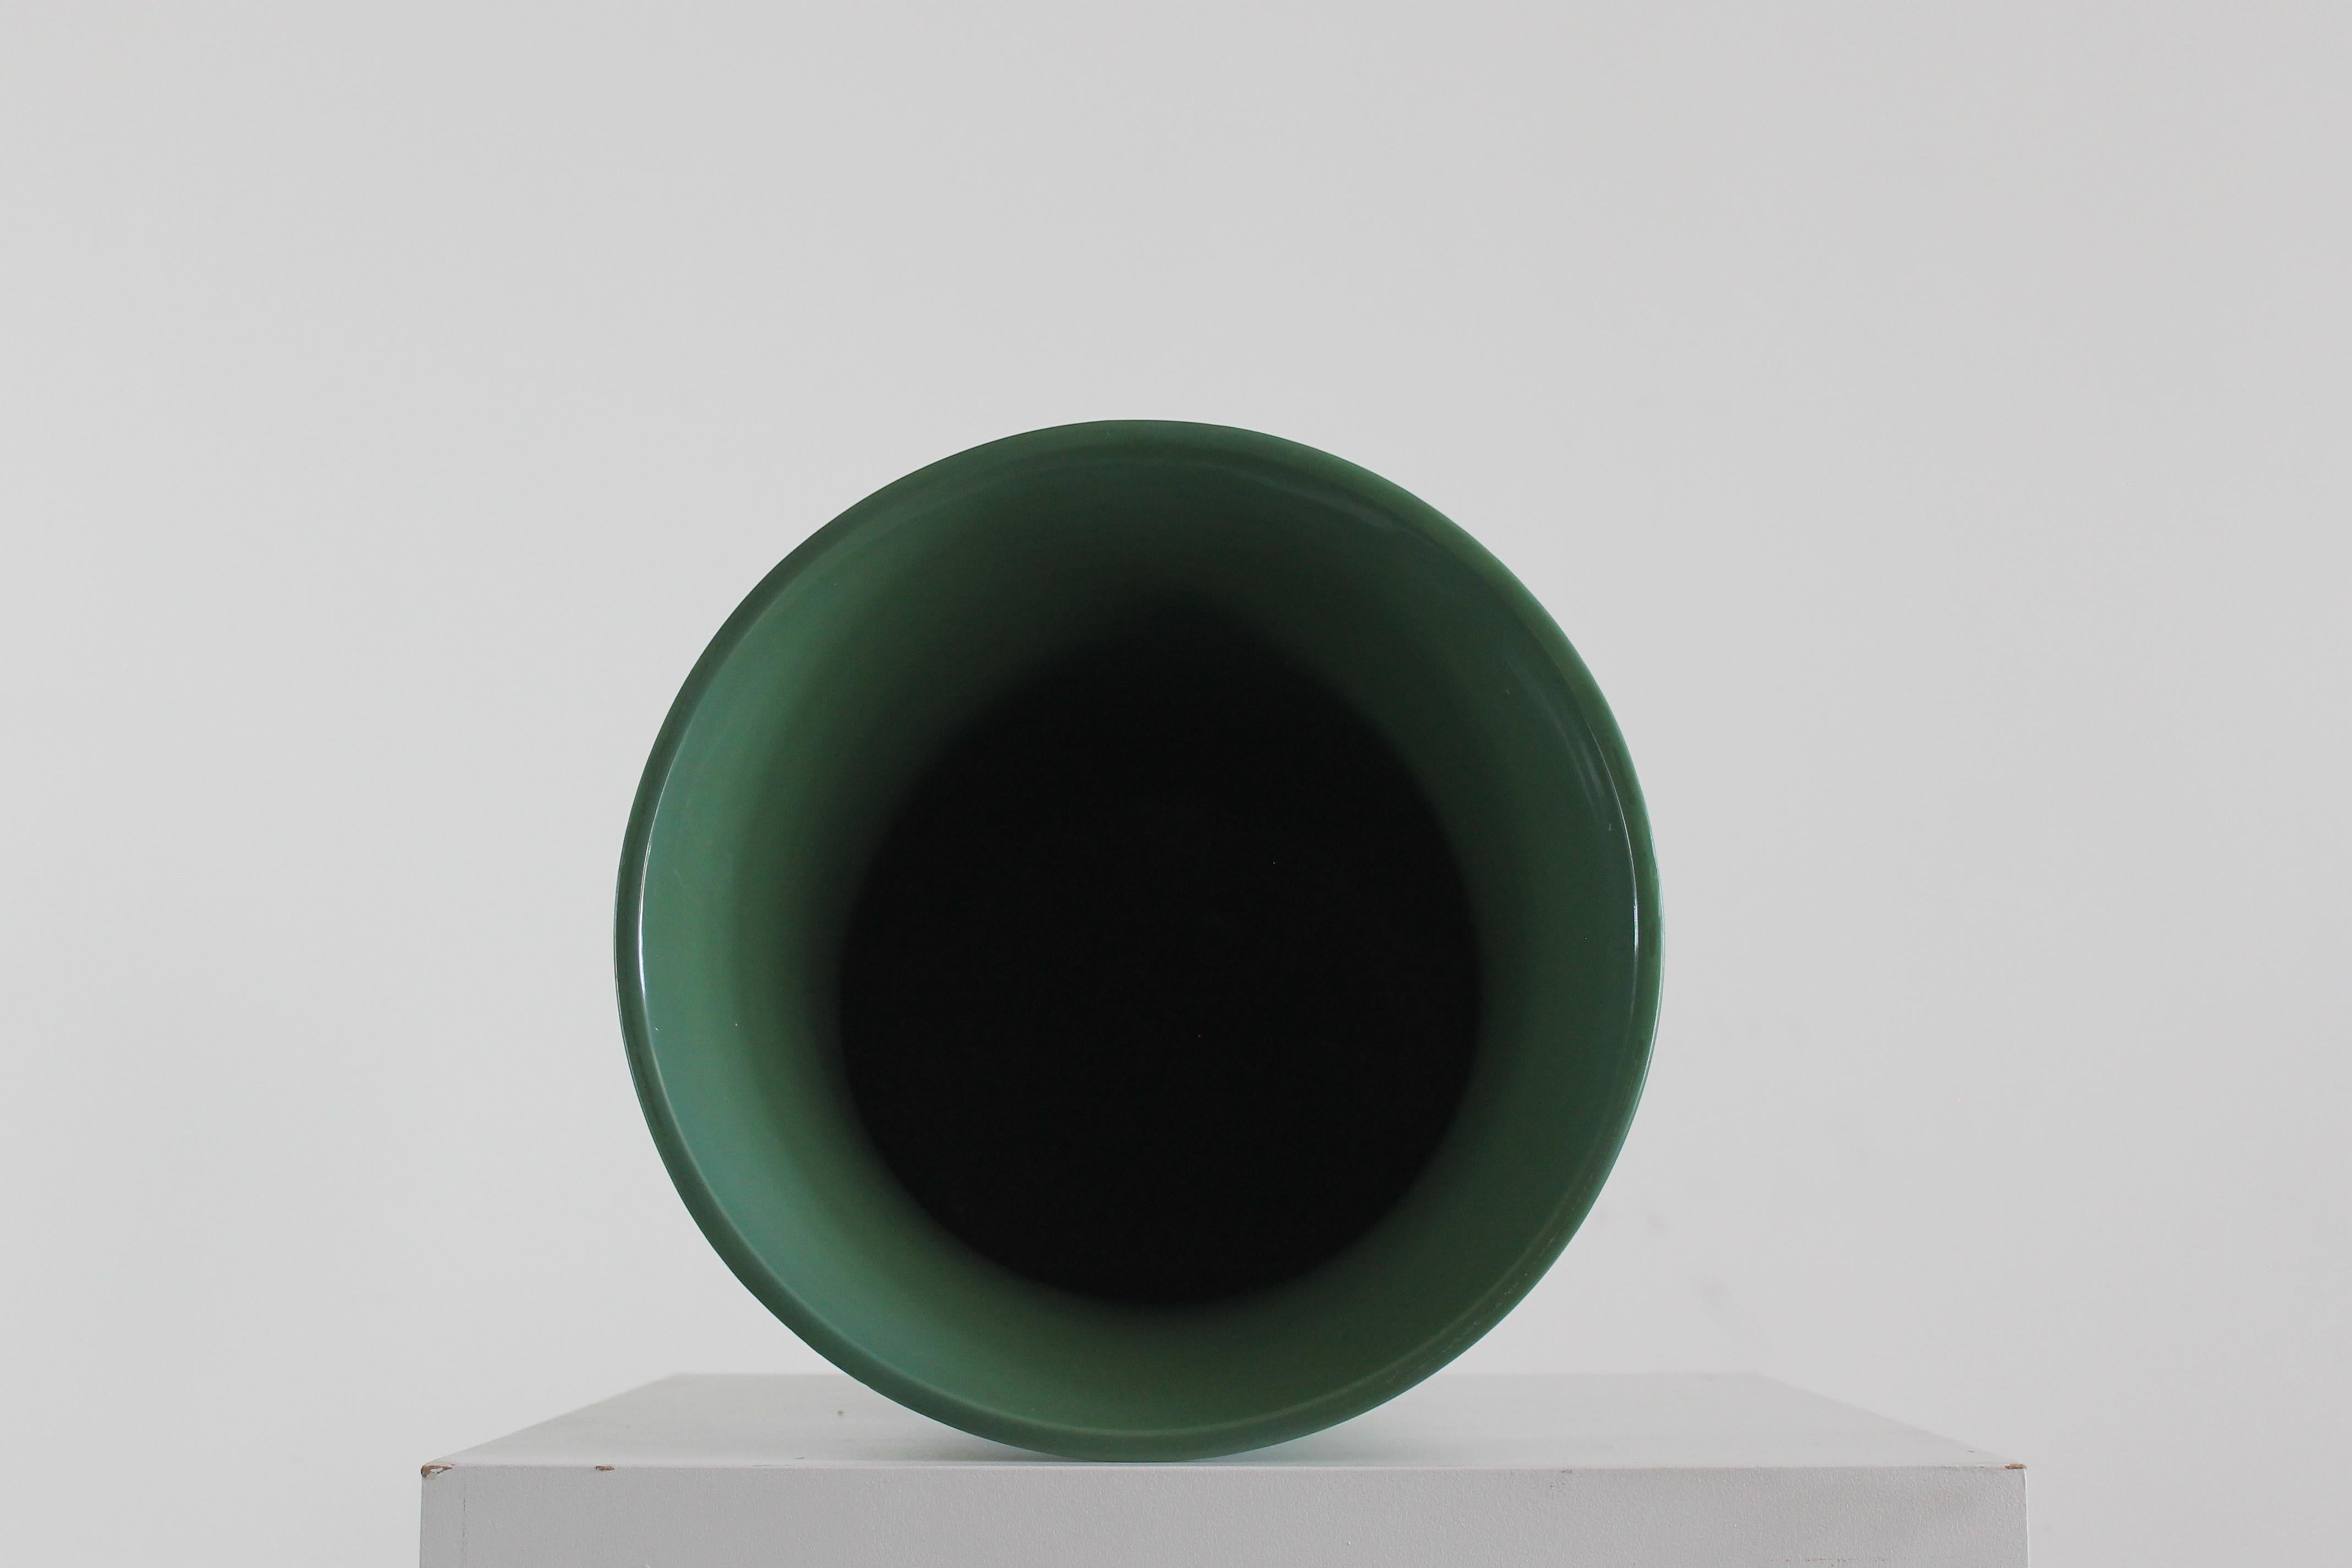 Italian Gio Ponti Large Green Vase in Ceramic by Richard Ginori 1930s Italy For Sale